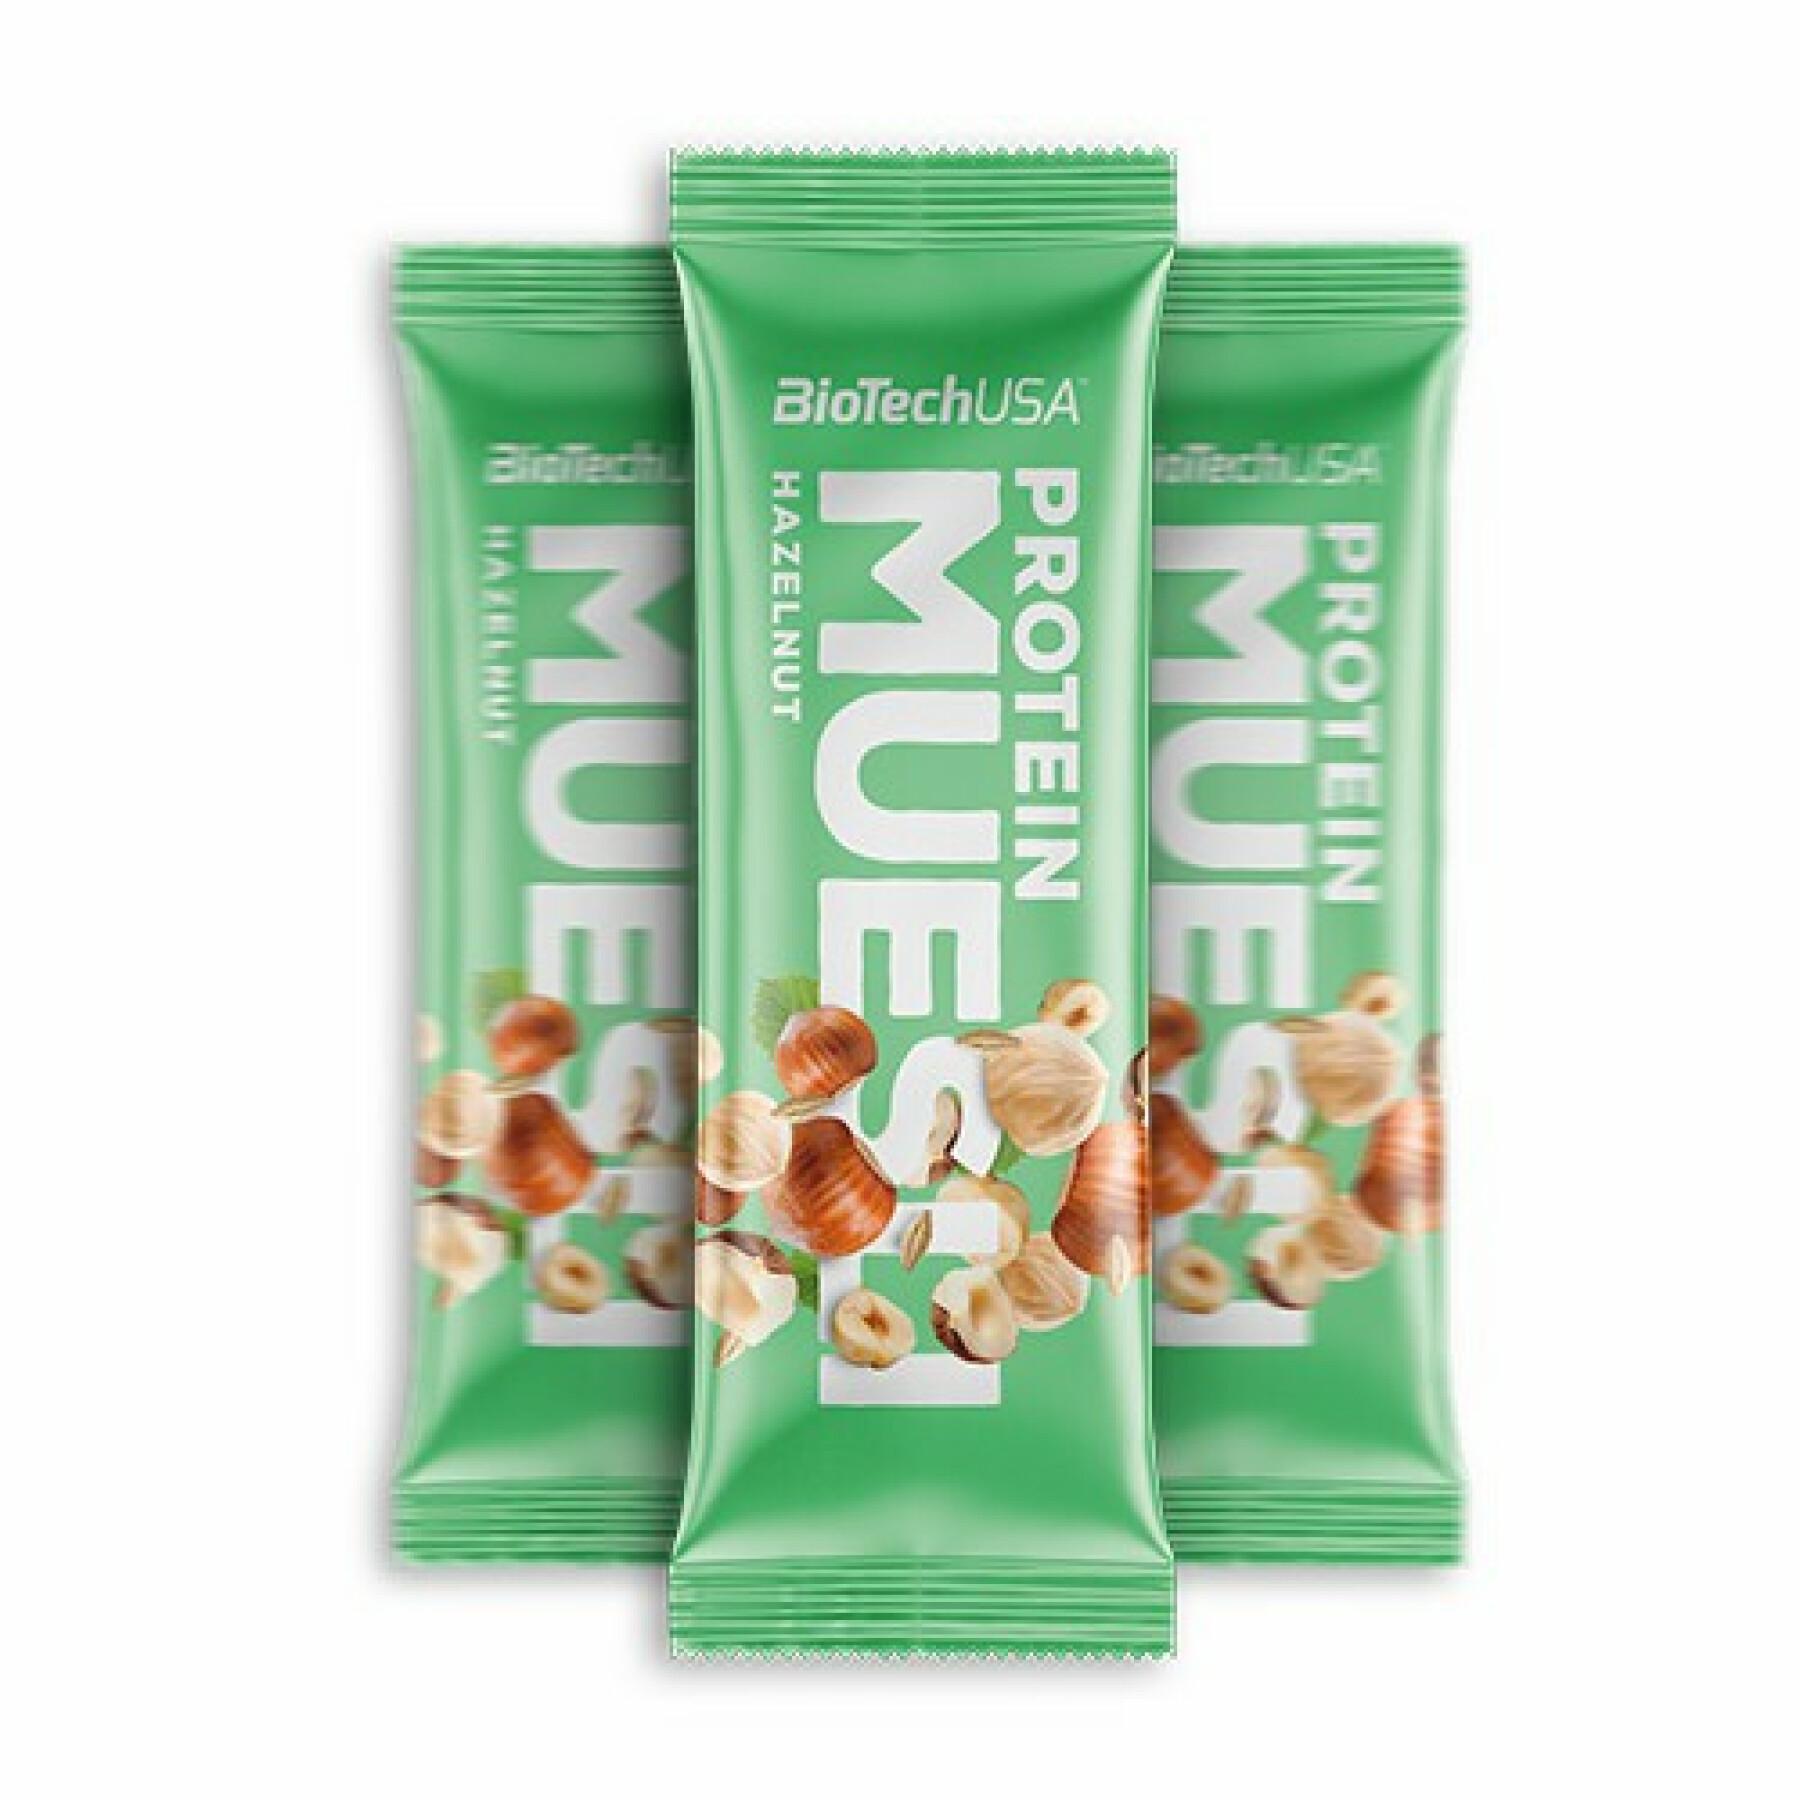 Protein snack boxes Biotech USA muesli - Noisette